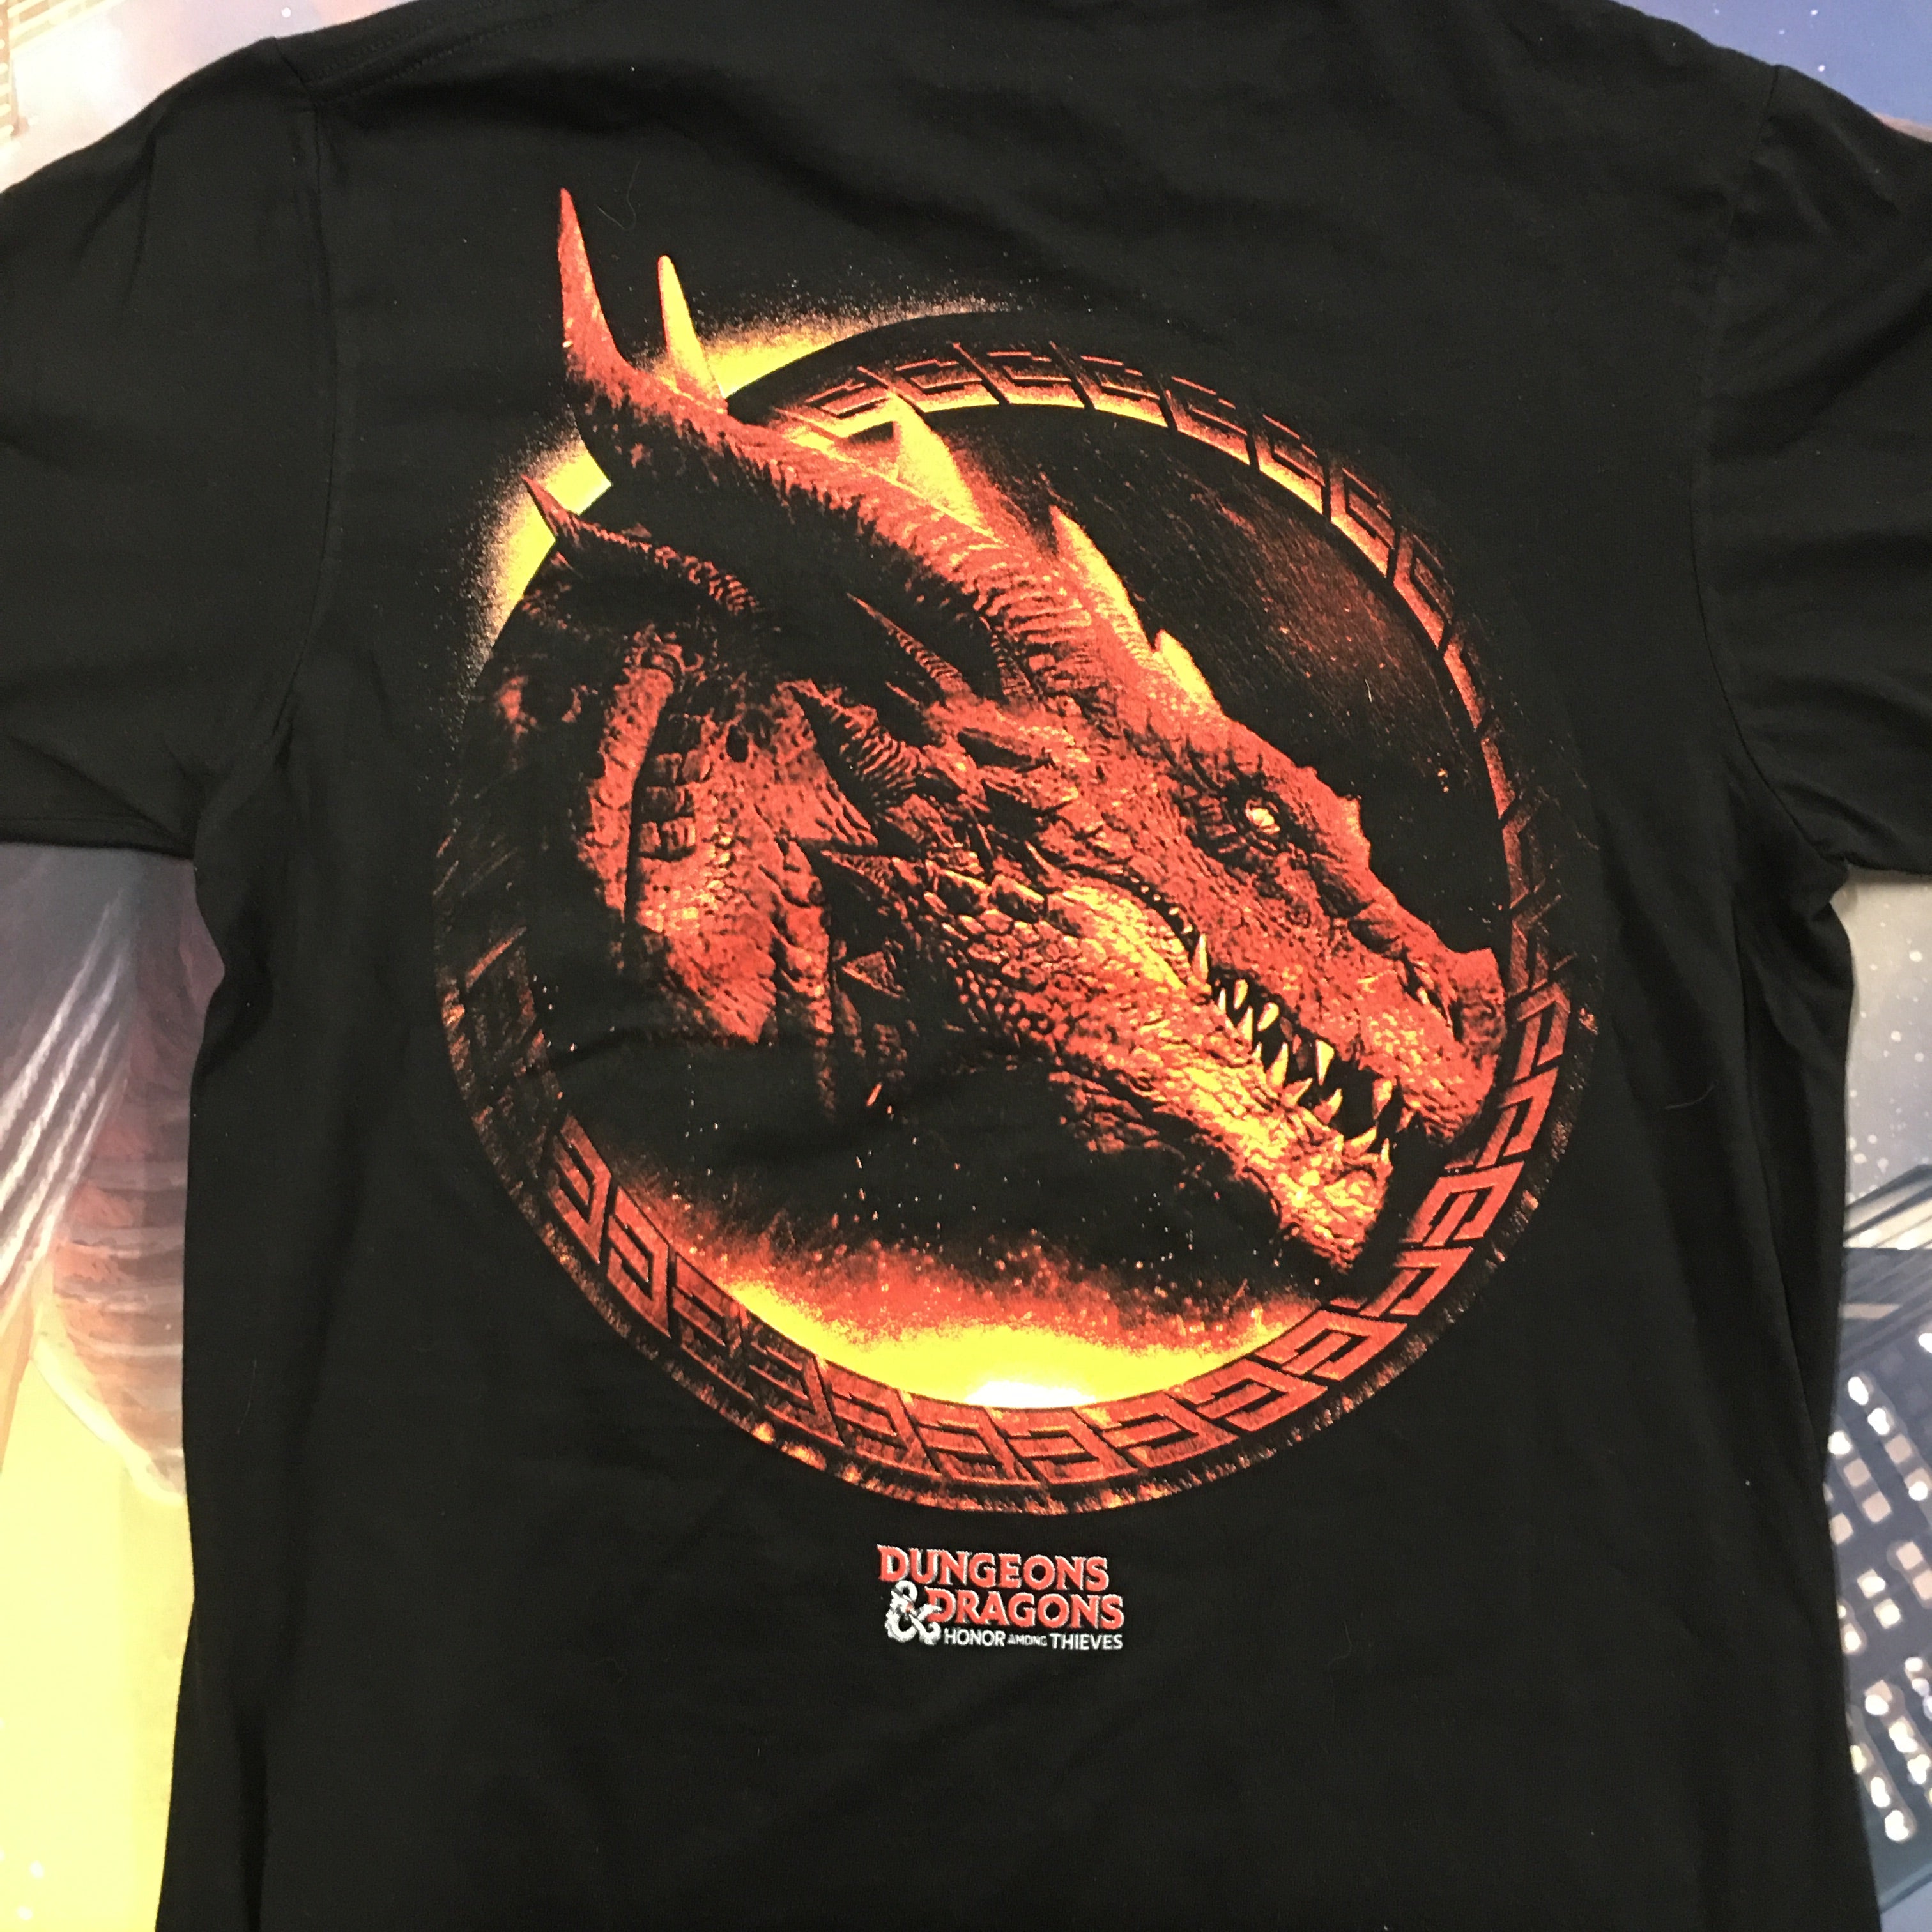 Dungeons & Dragons Black T-Shirt | L.A. Mood Comics and Games